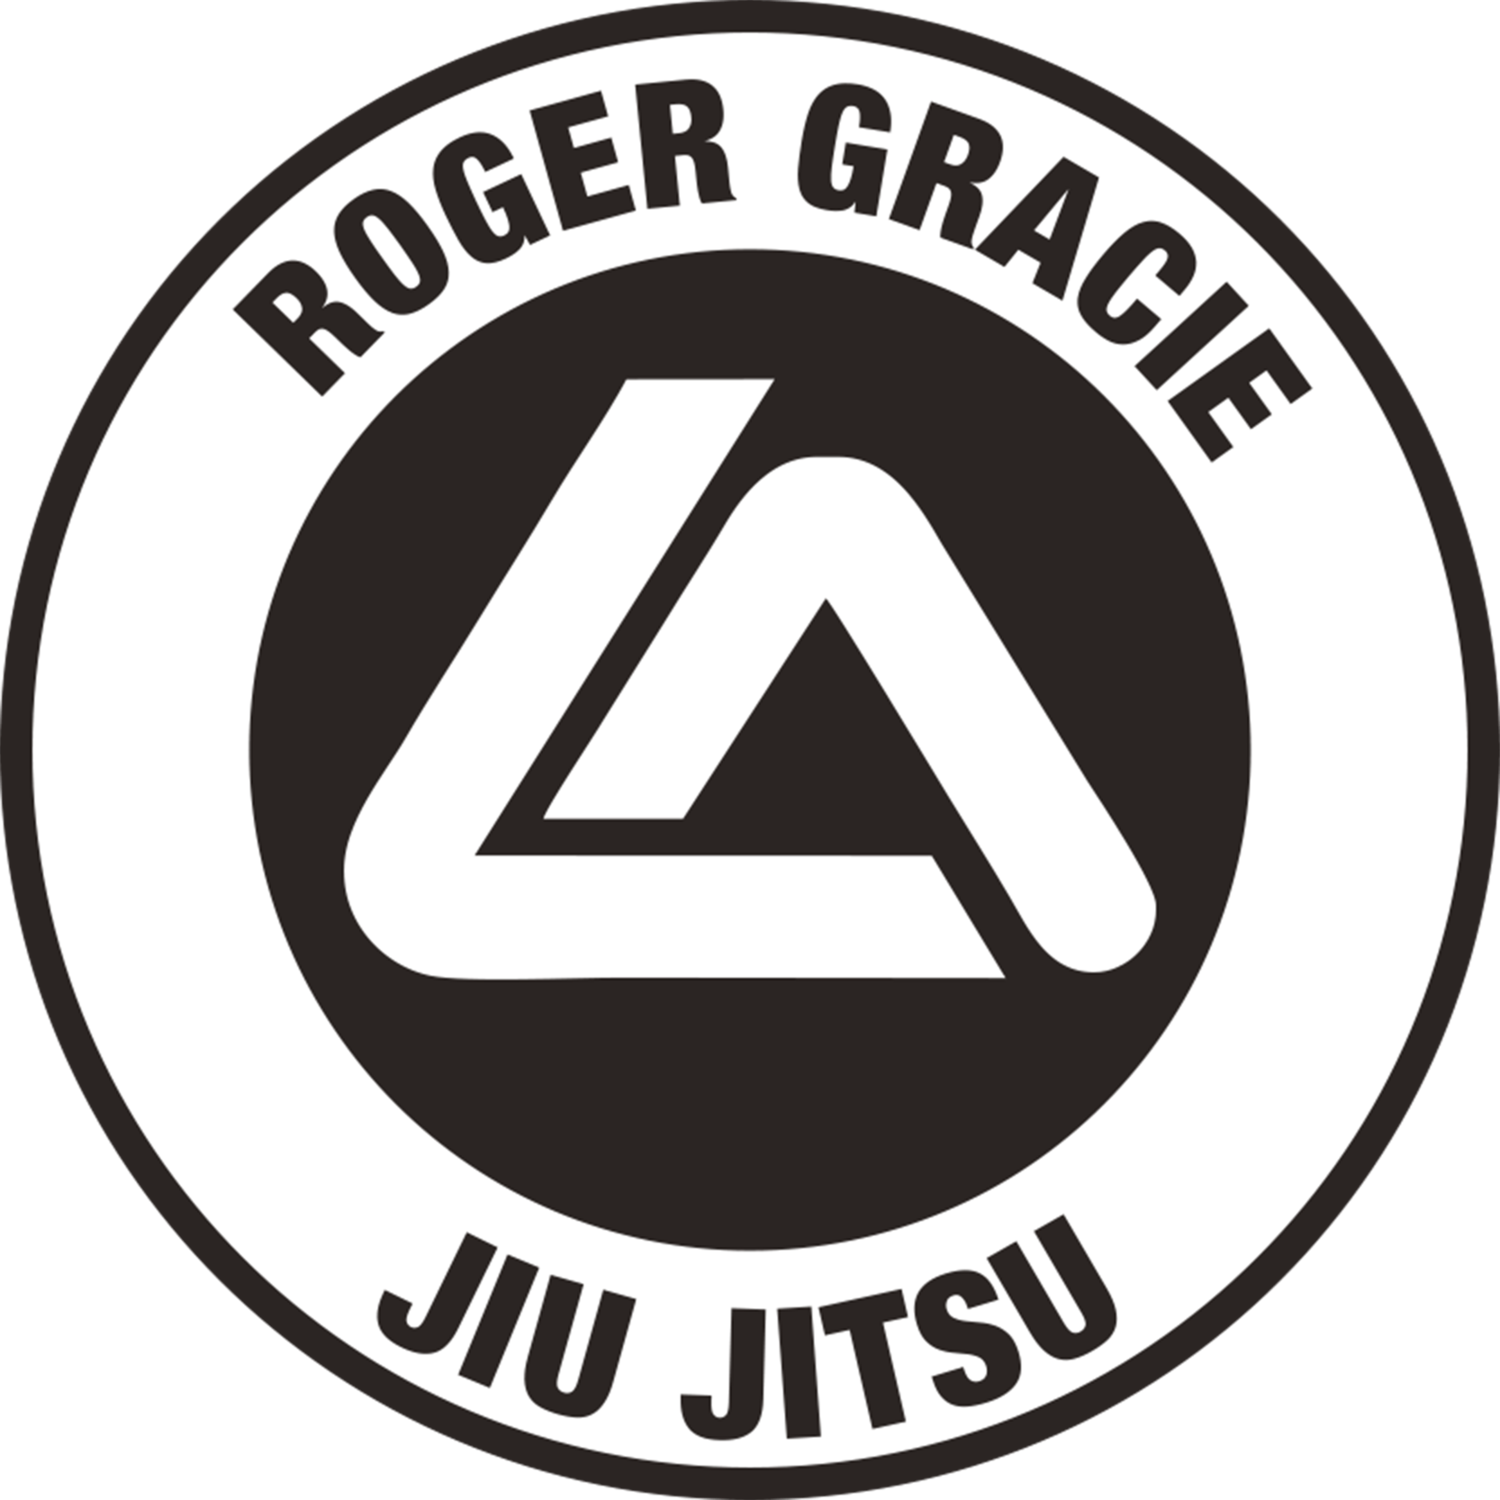 Roger Gracie Brazilian Jiu Jitsu Academy